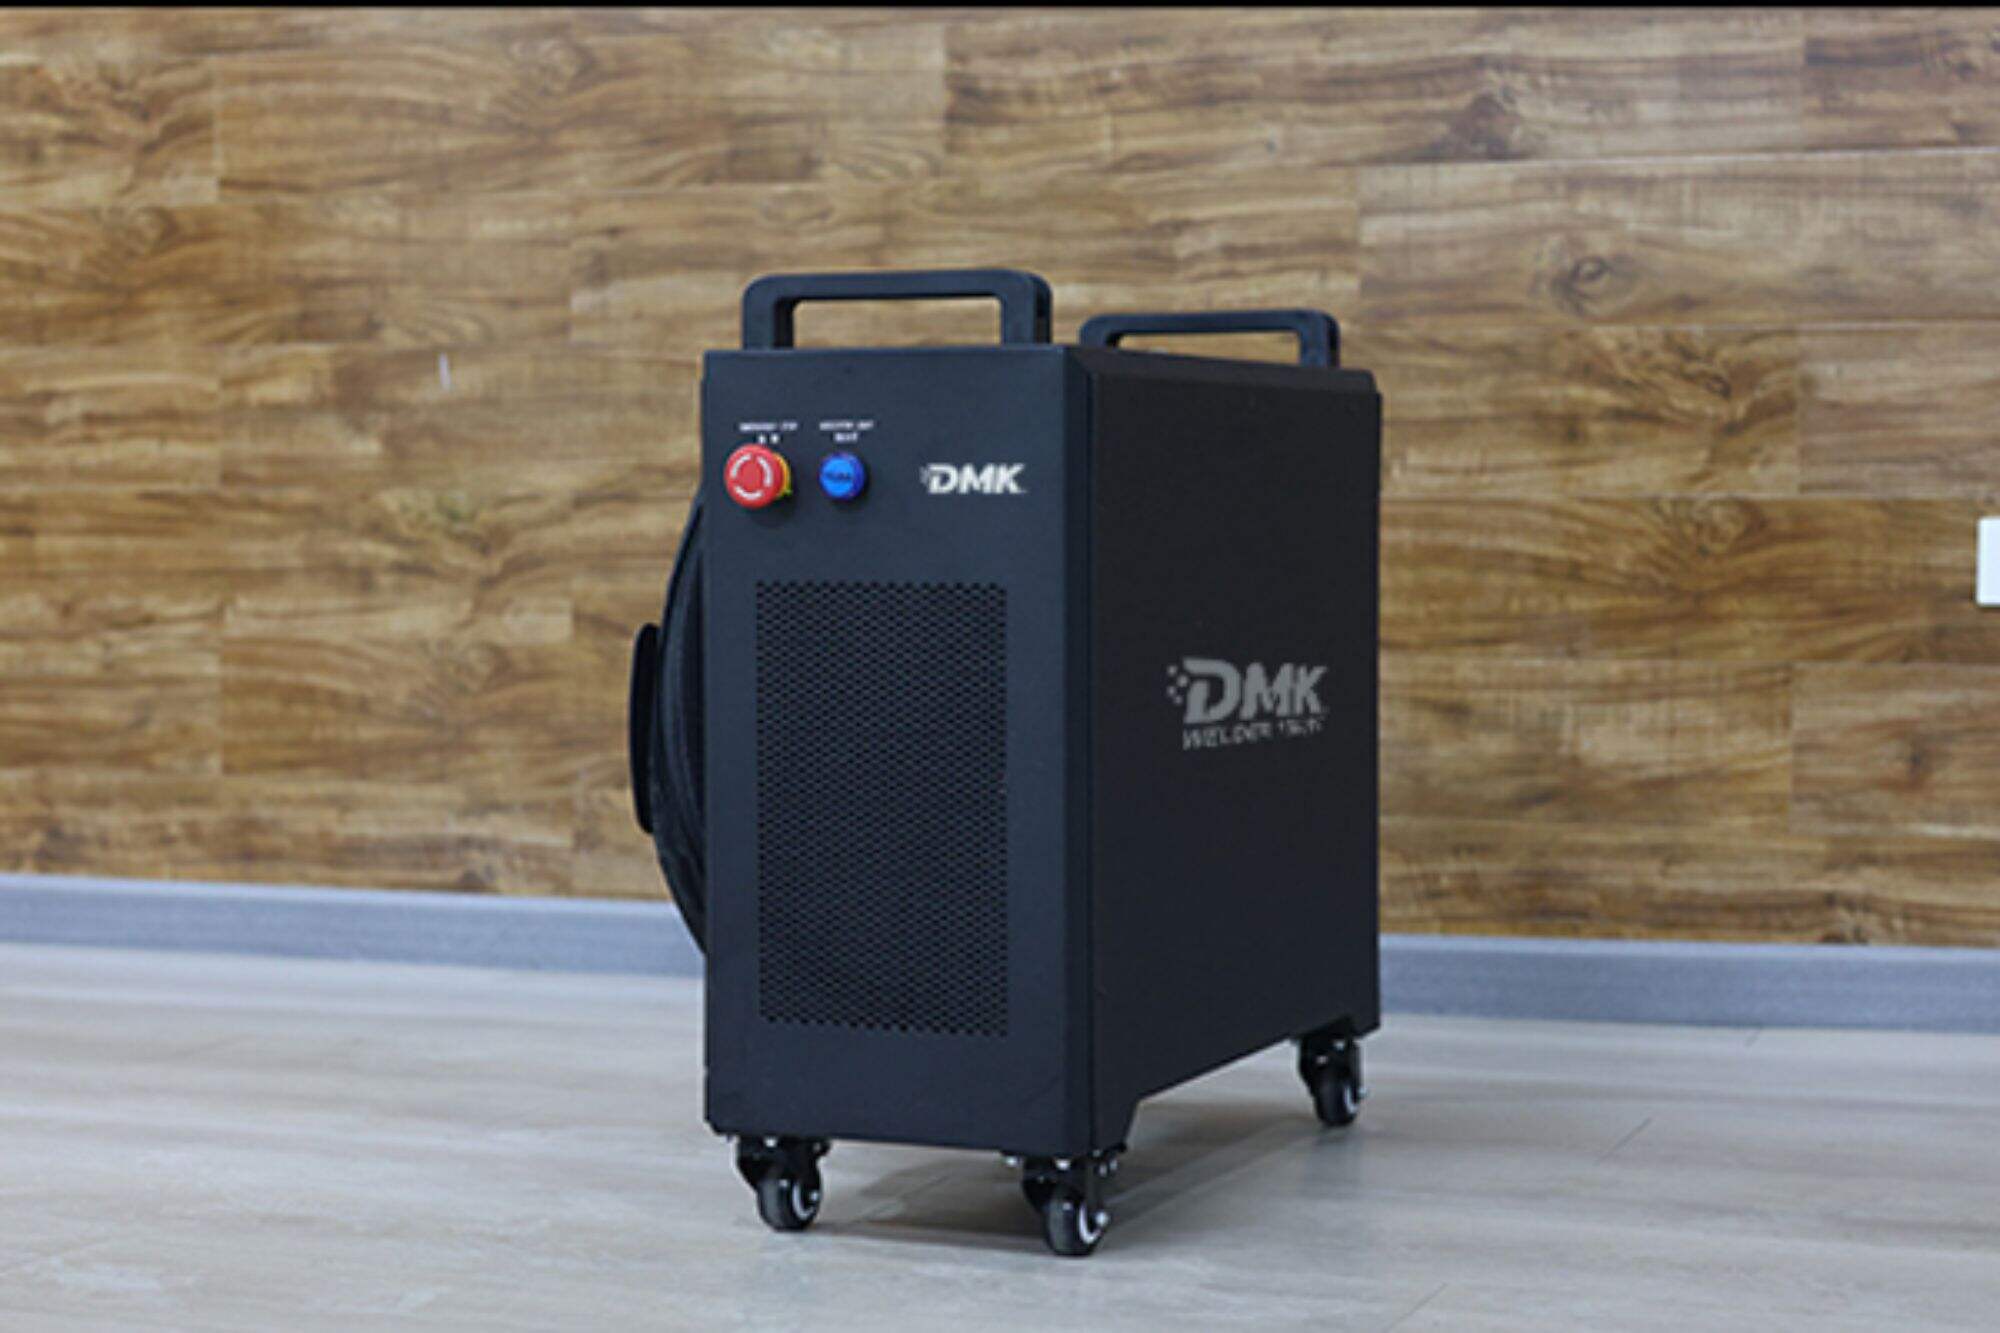 DMK ミニ空冷レーザー溶接機の設置 DMK ミニ空冷レーザー溶接機の設置チュートリアル